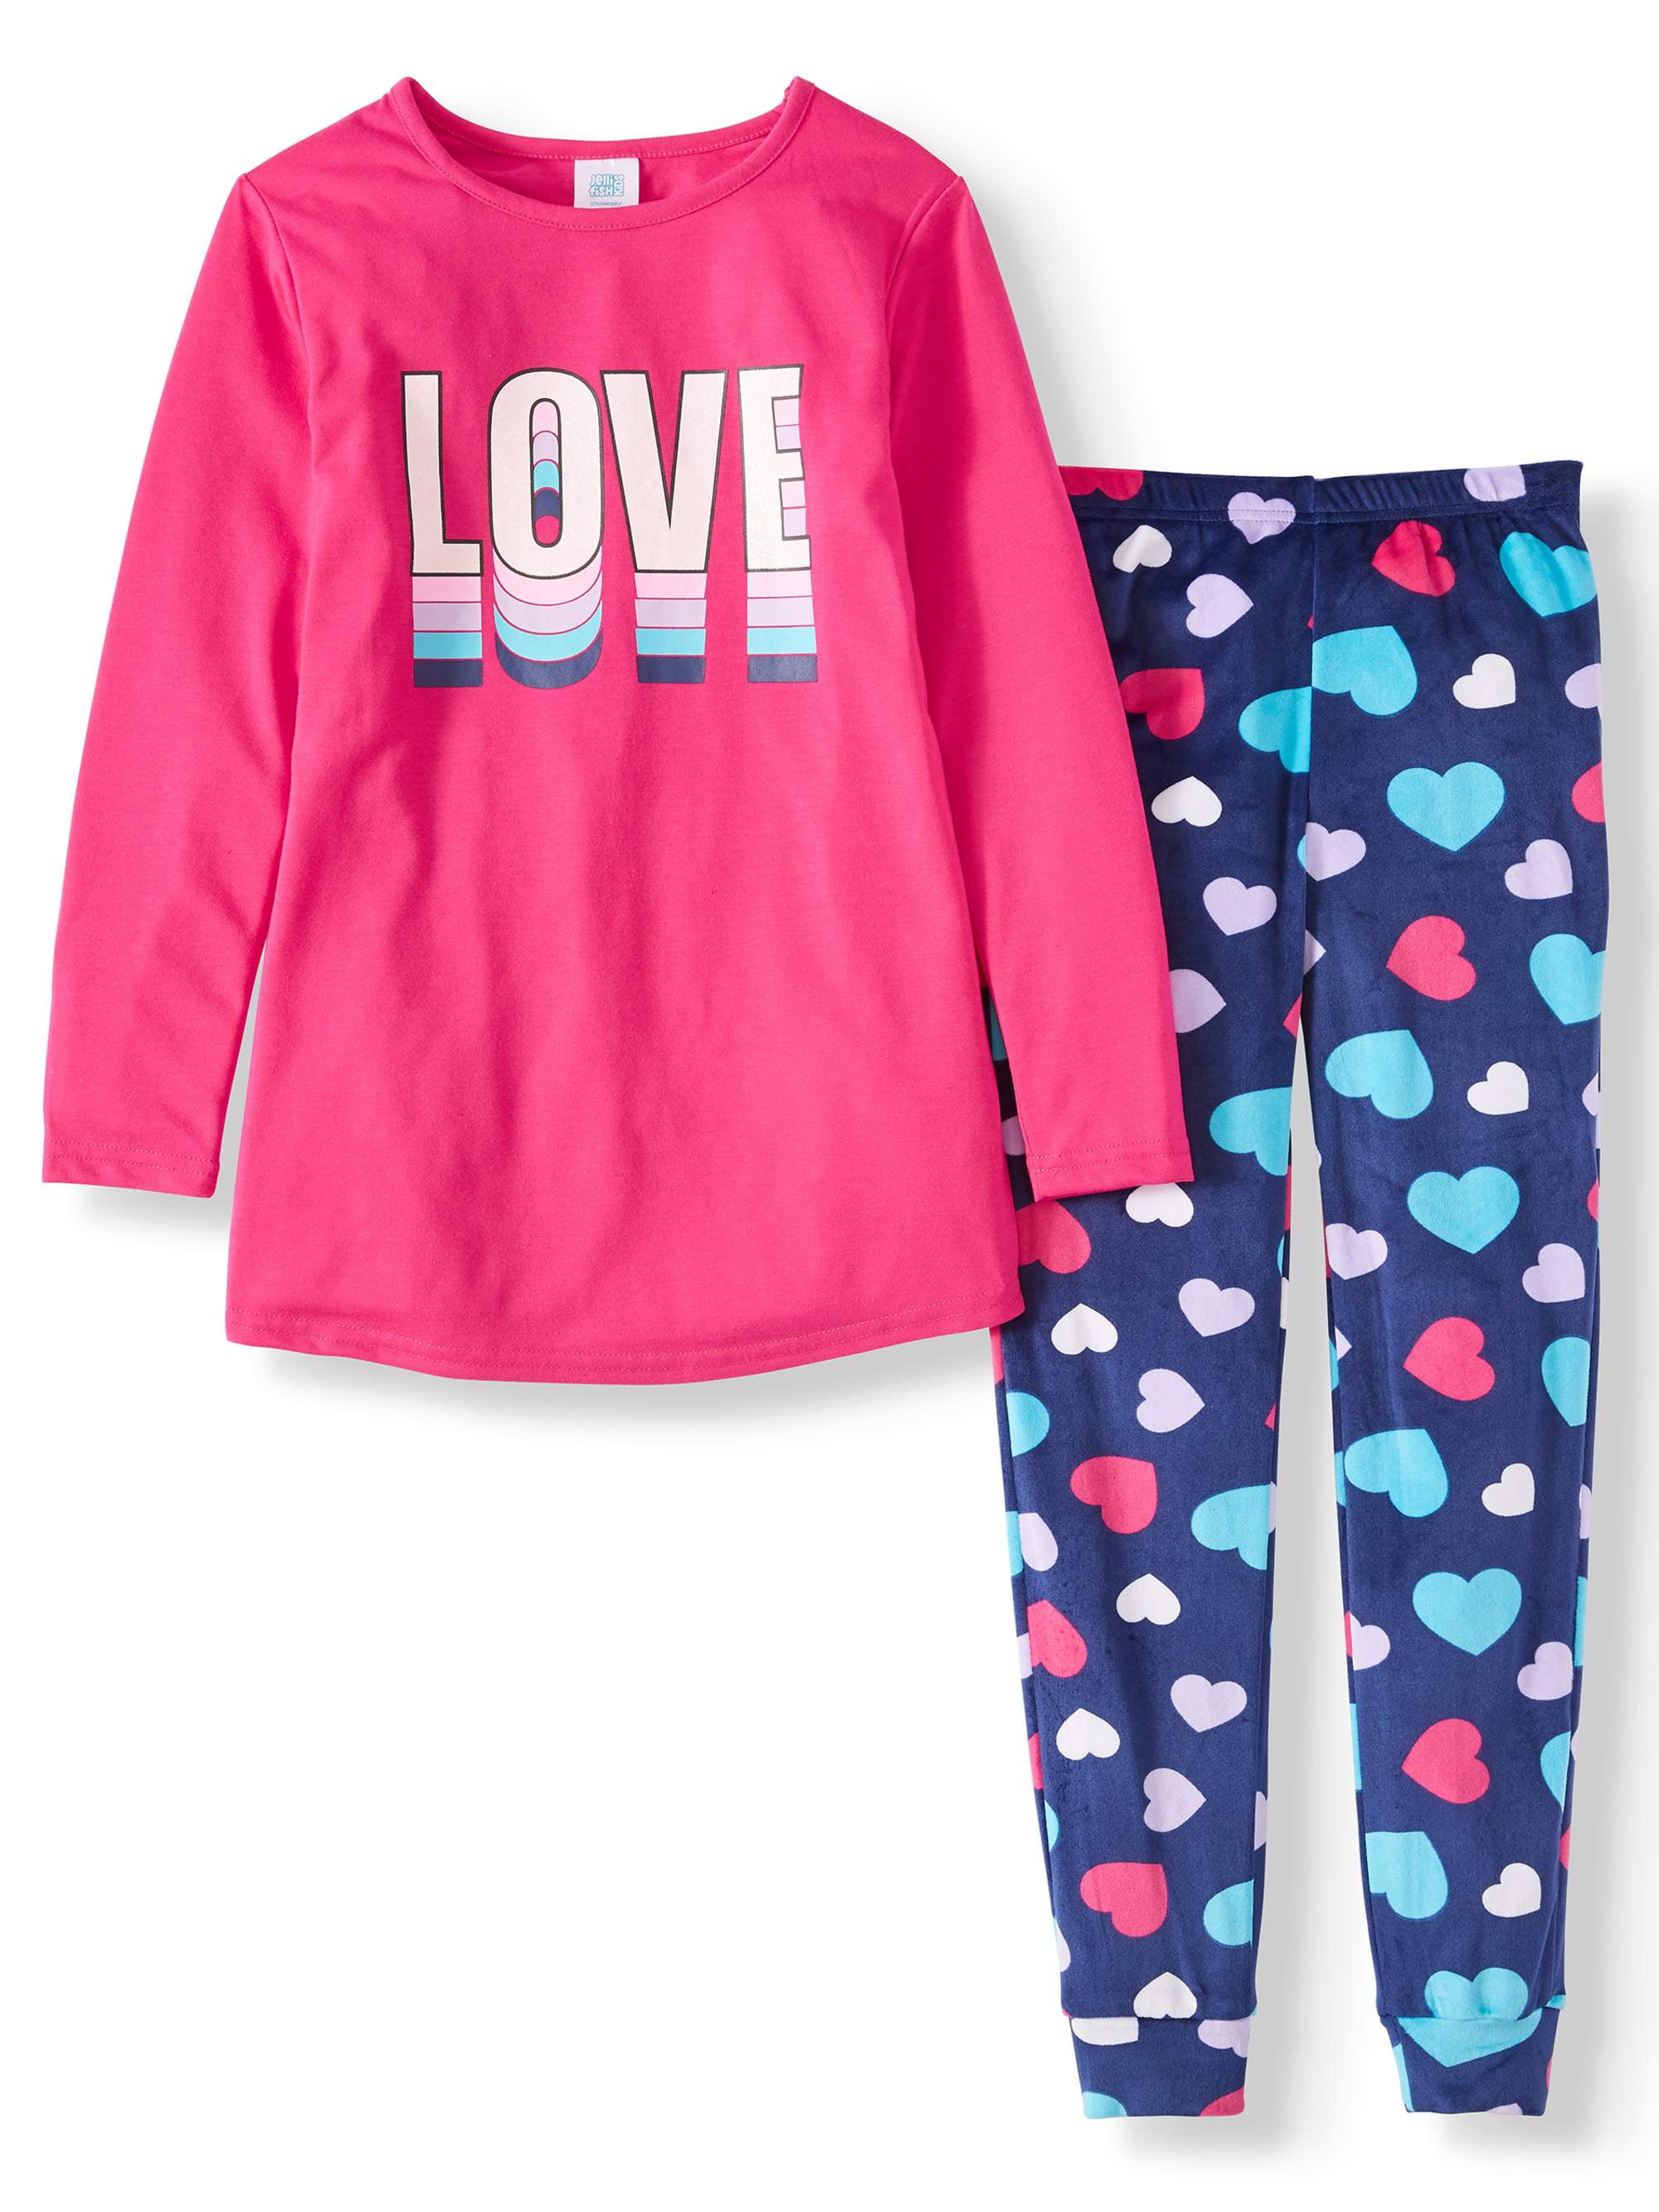 Jellifish Kids Girls Holiday 2 Piece Pajama & Hat Set Long Sleeve Top & PJ Pants